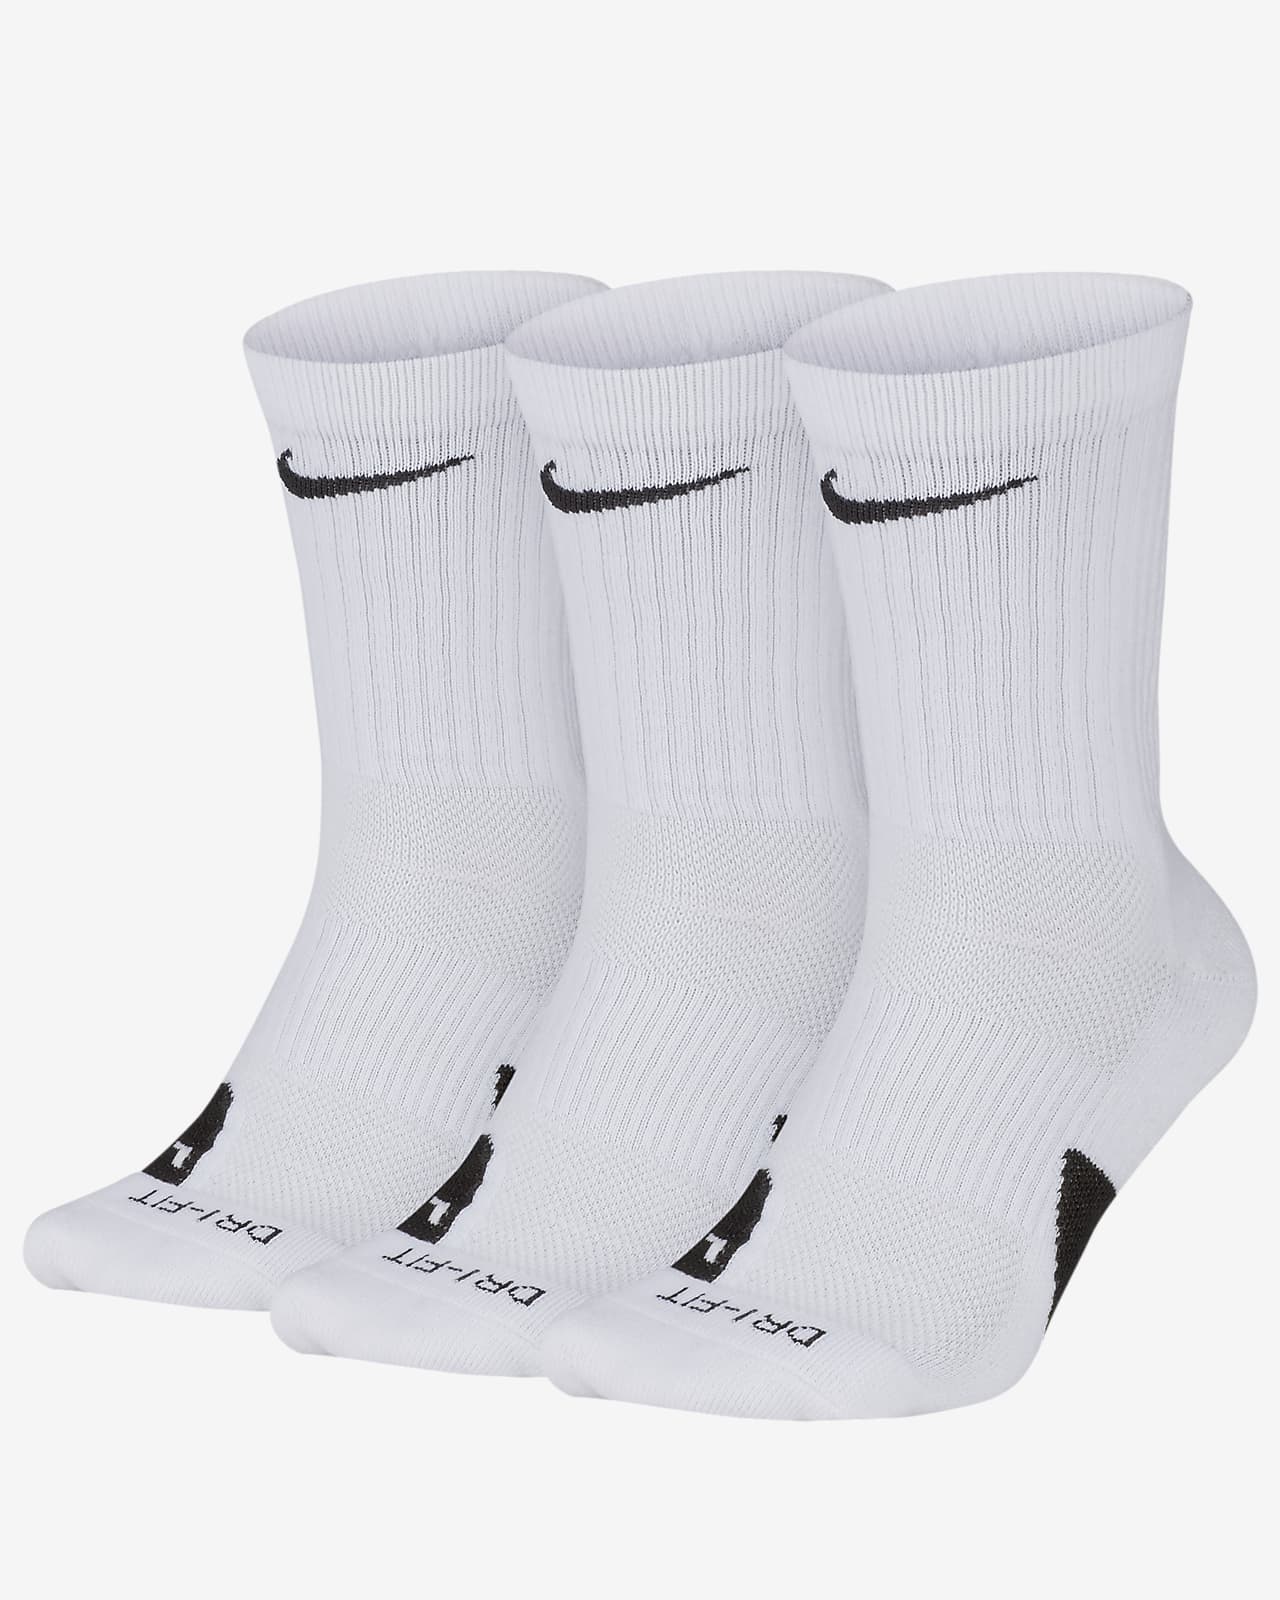 nike elite basketball socks sale